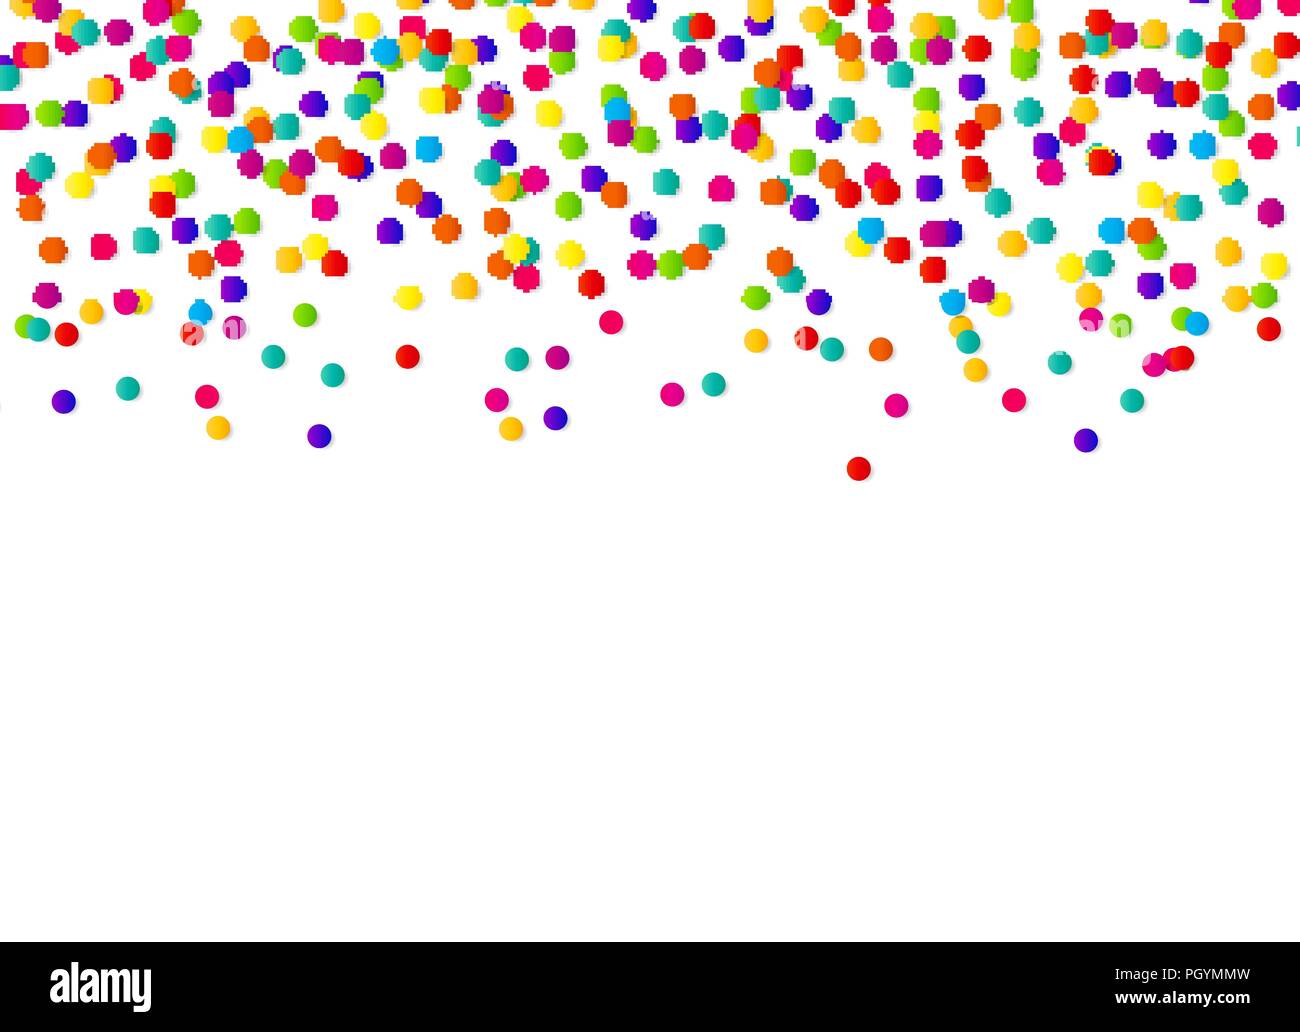 Abstrakte Konfetti Hintergrund mit Polka Dot Konfetti. Vector Illustration Stock Vektor